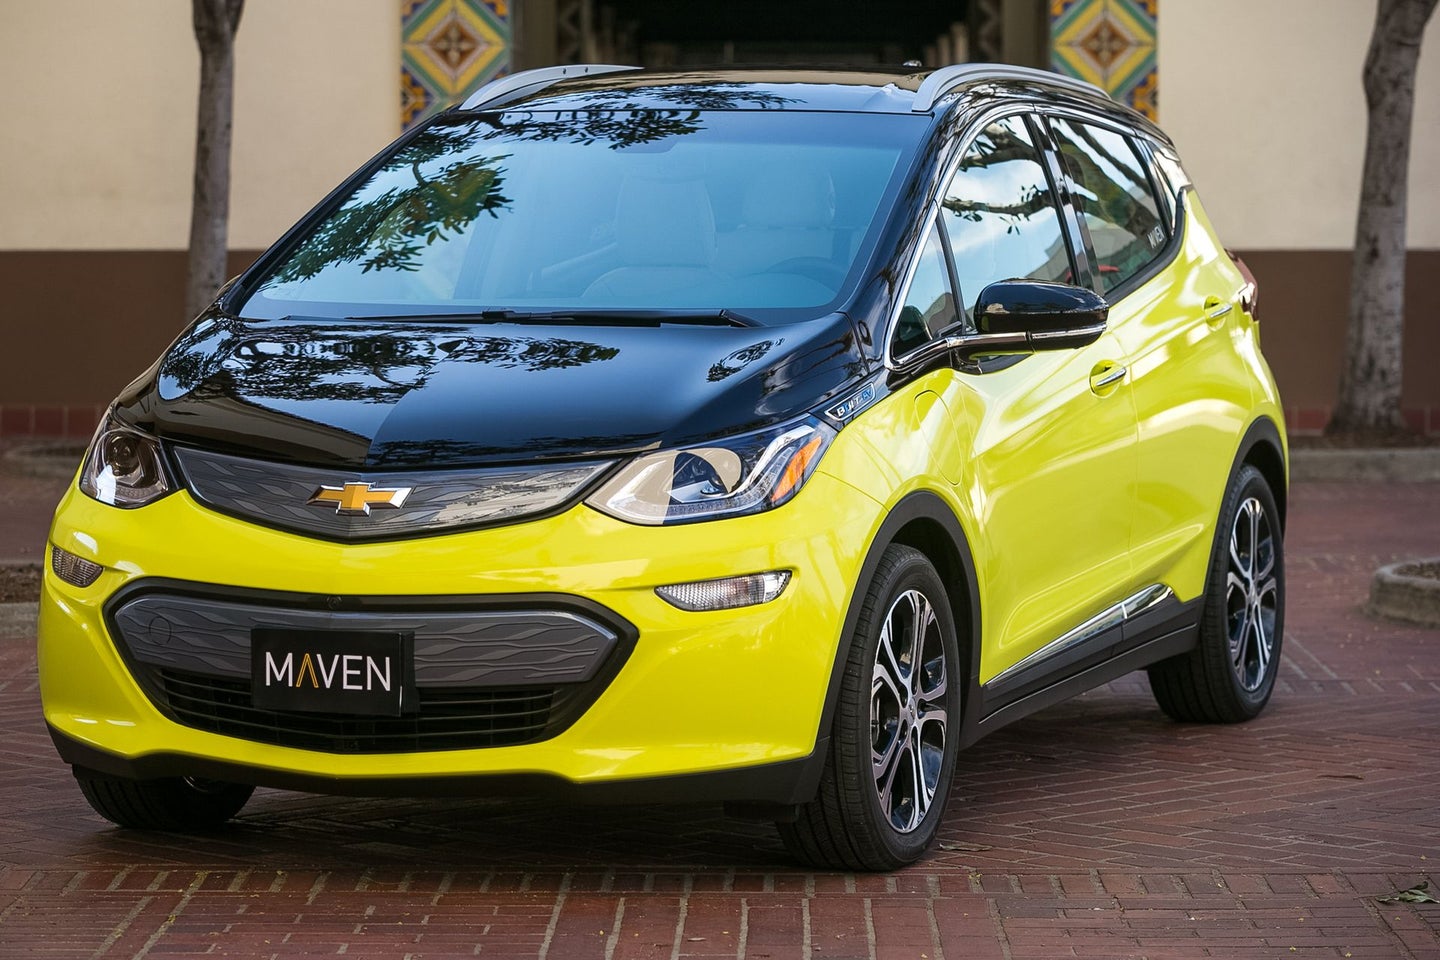 GM to Rent Bolt EV to Freelance Drivers Through Maven Gig